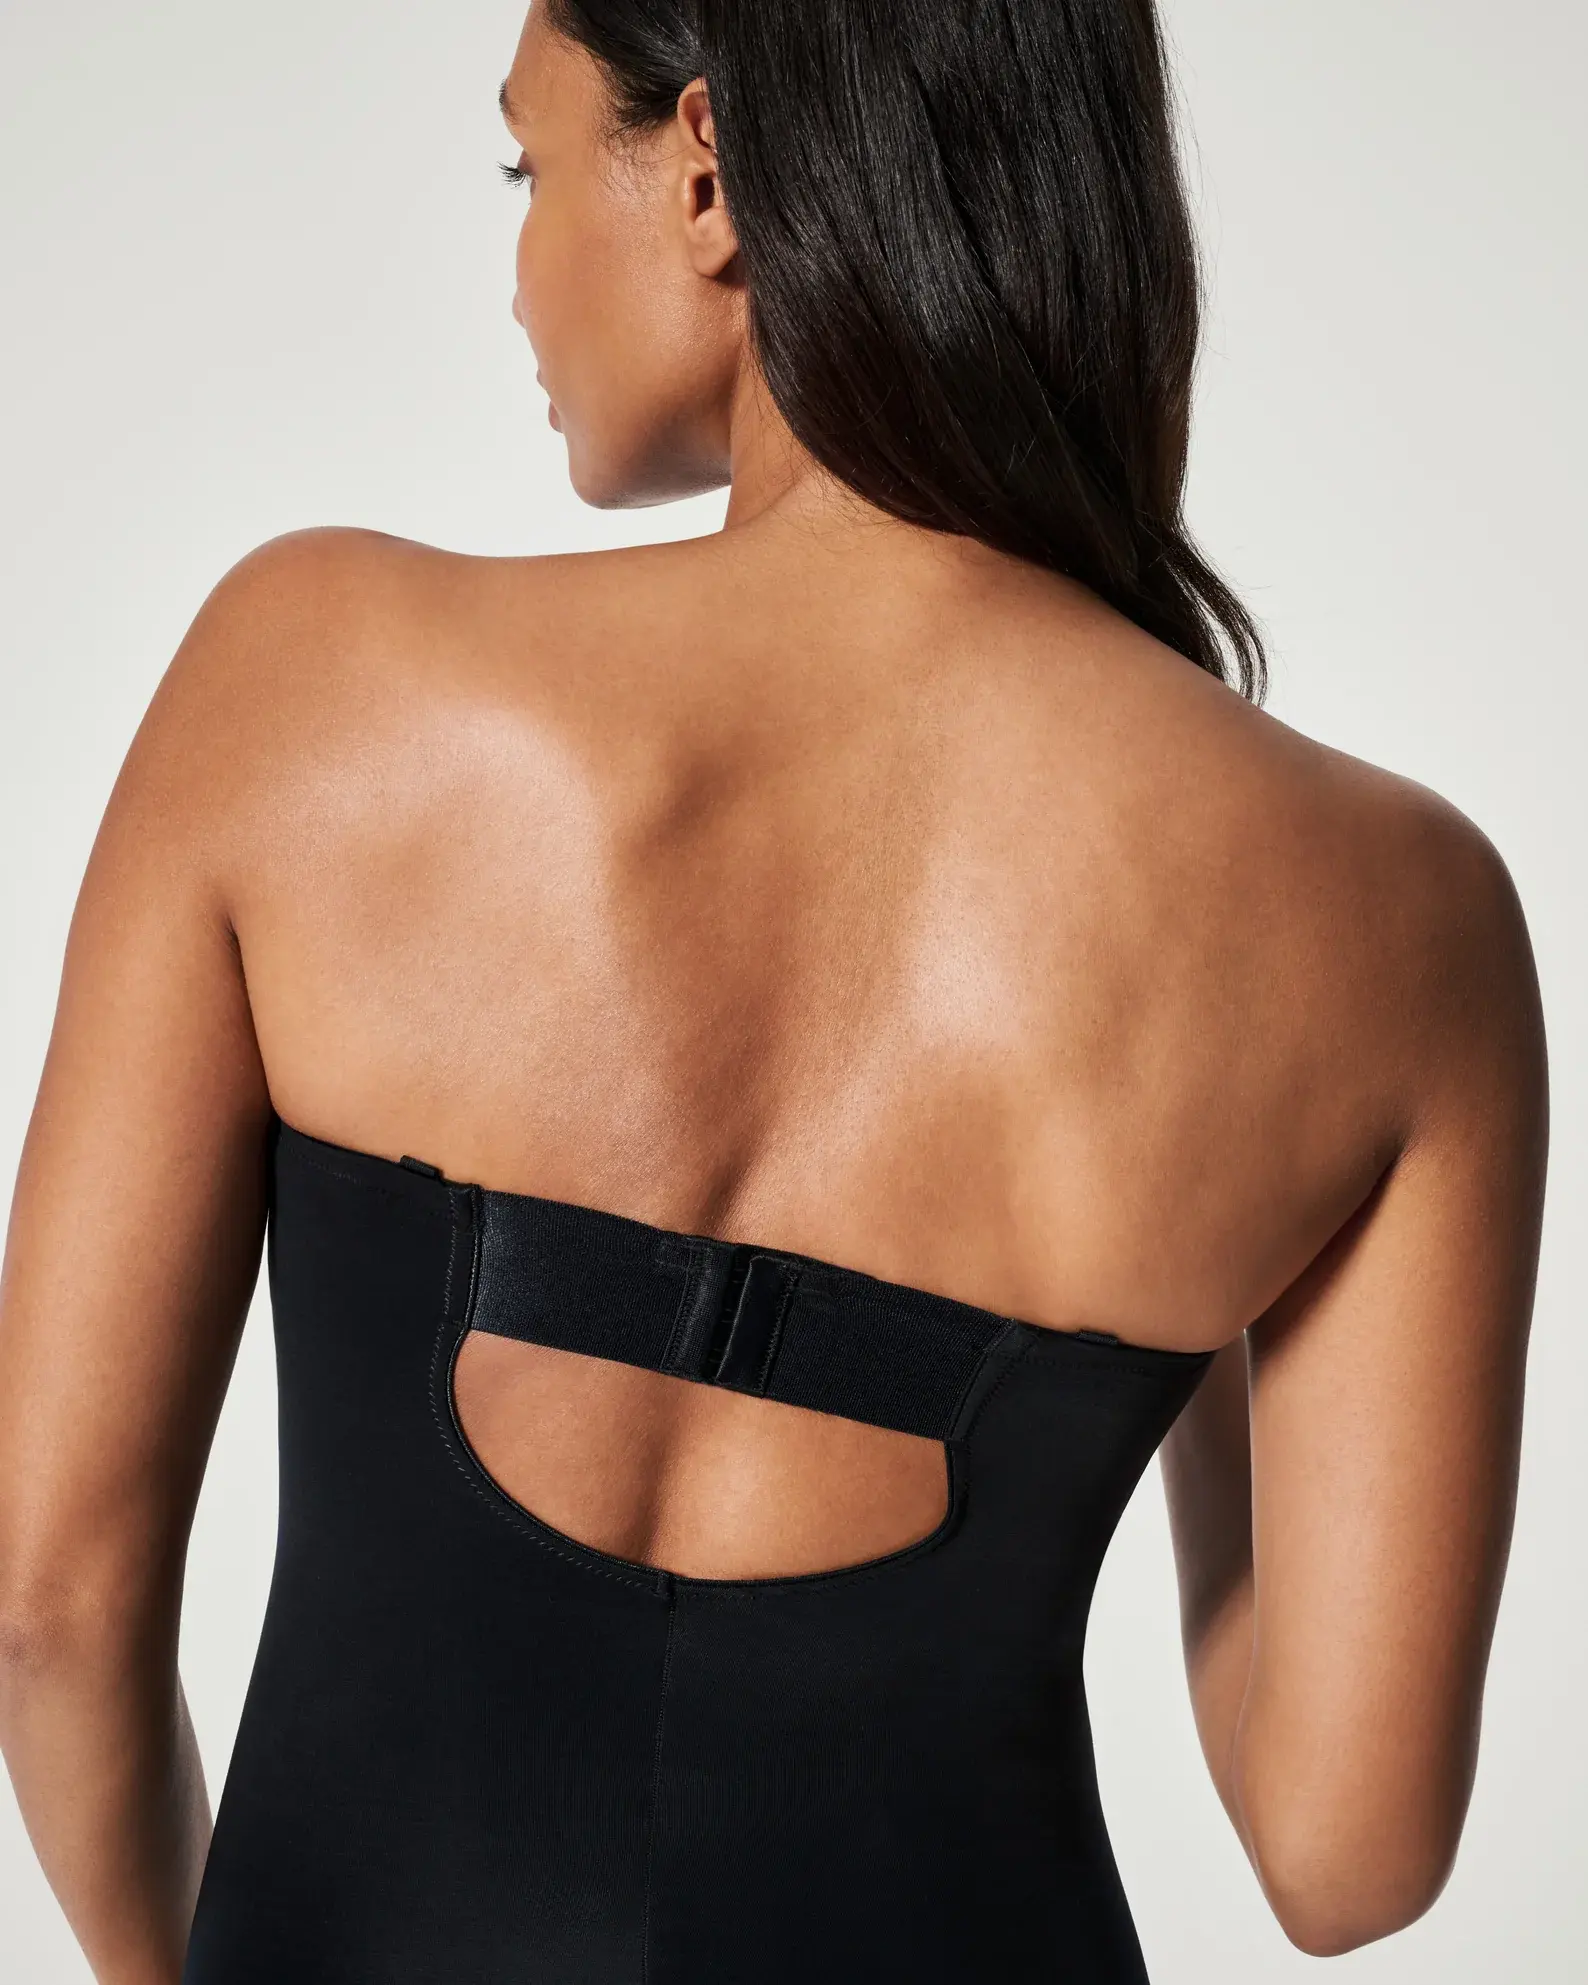 Spanx Strapless Bodysuit 1X Black - $29 (47% Off Retail) - From Suzy